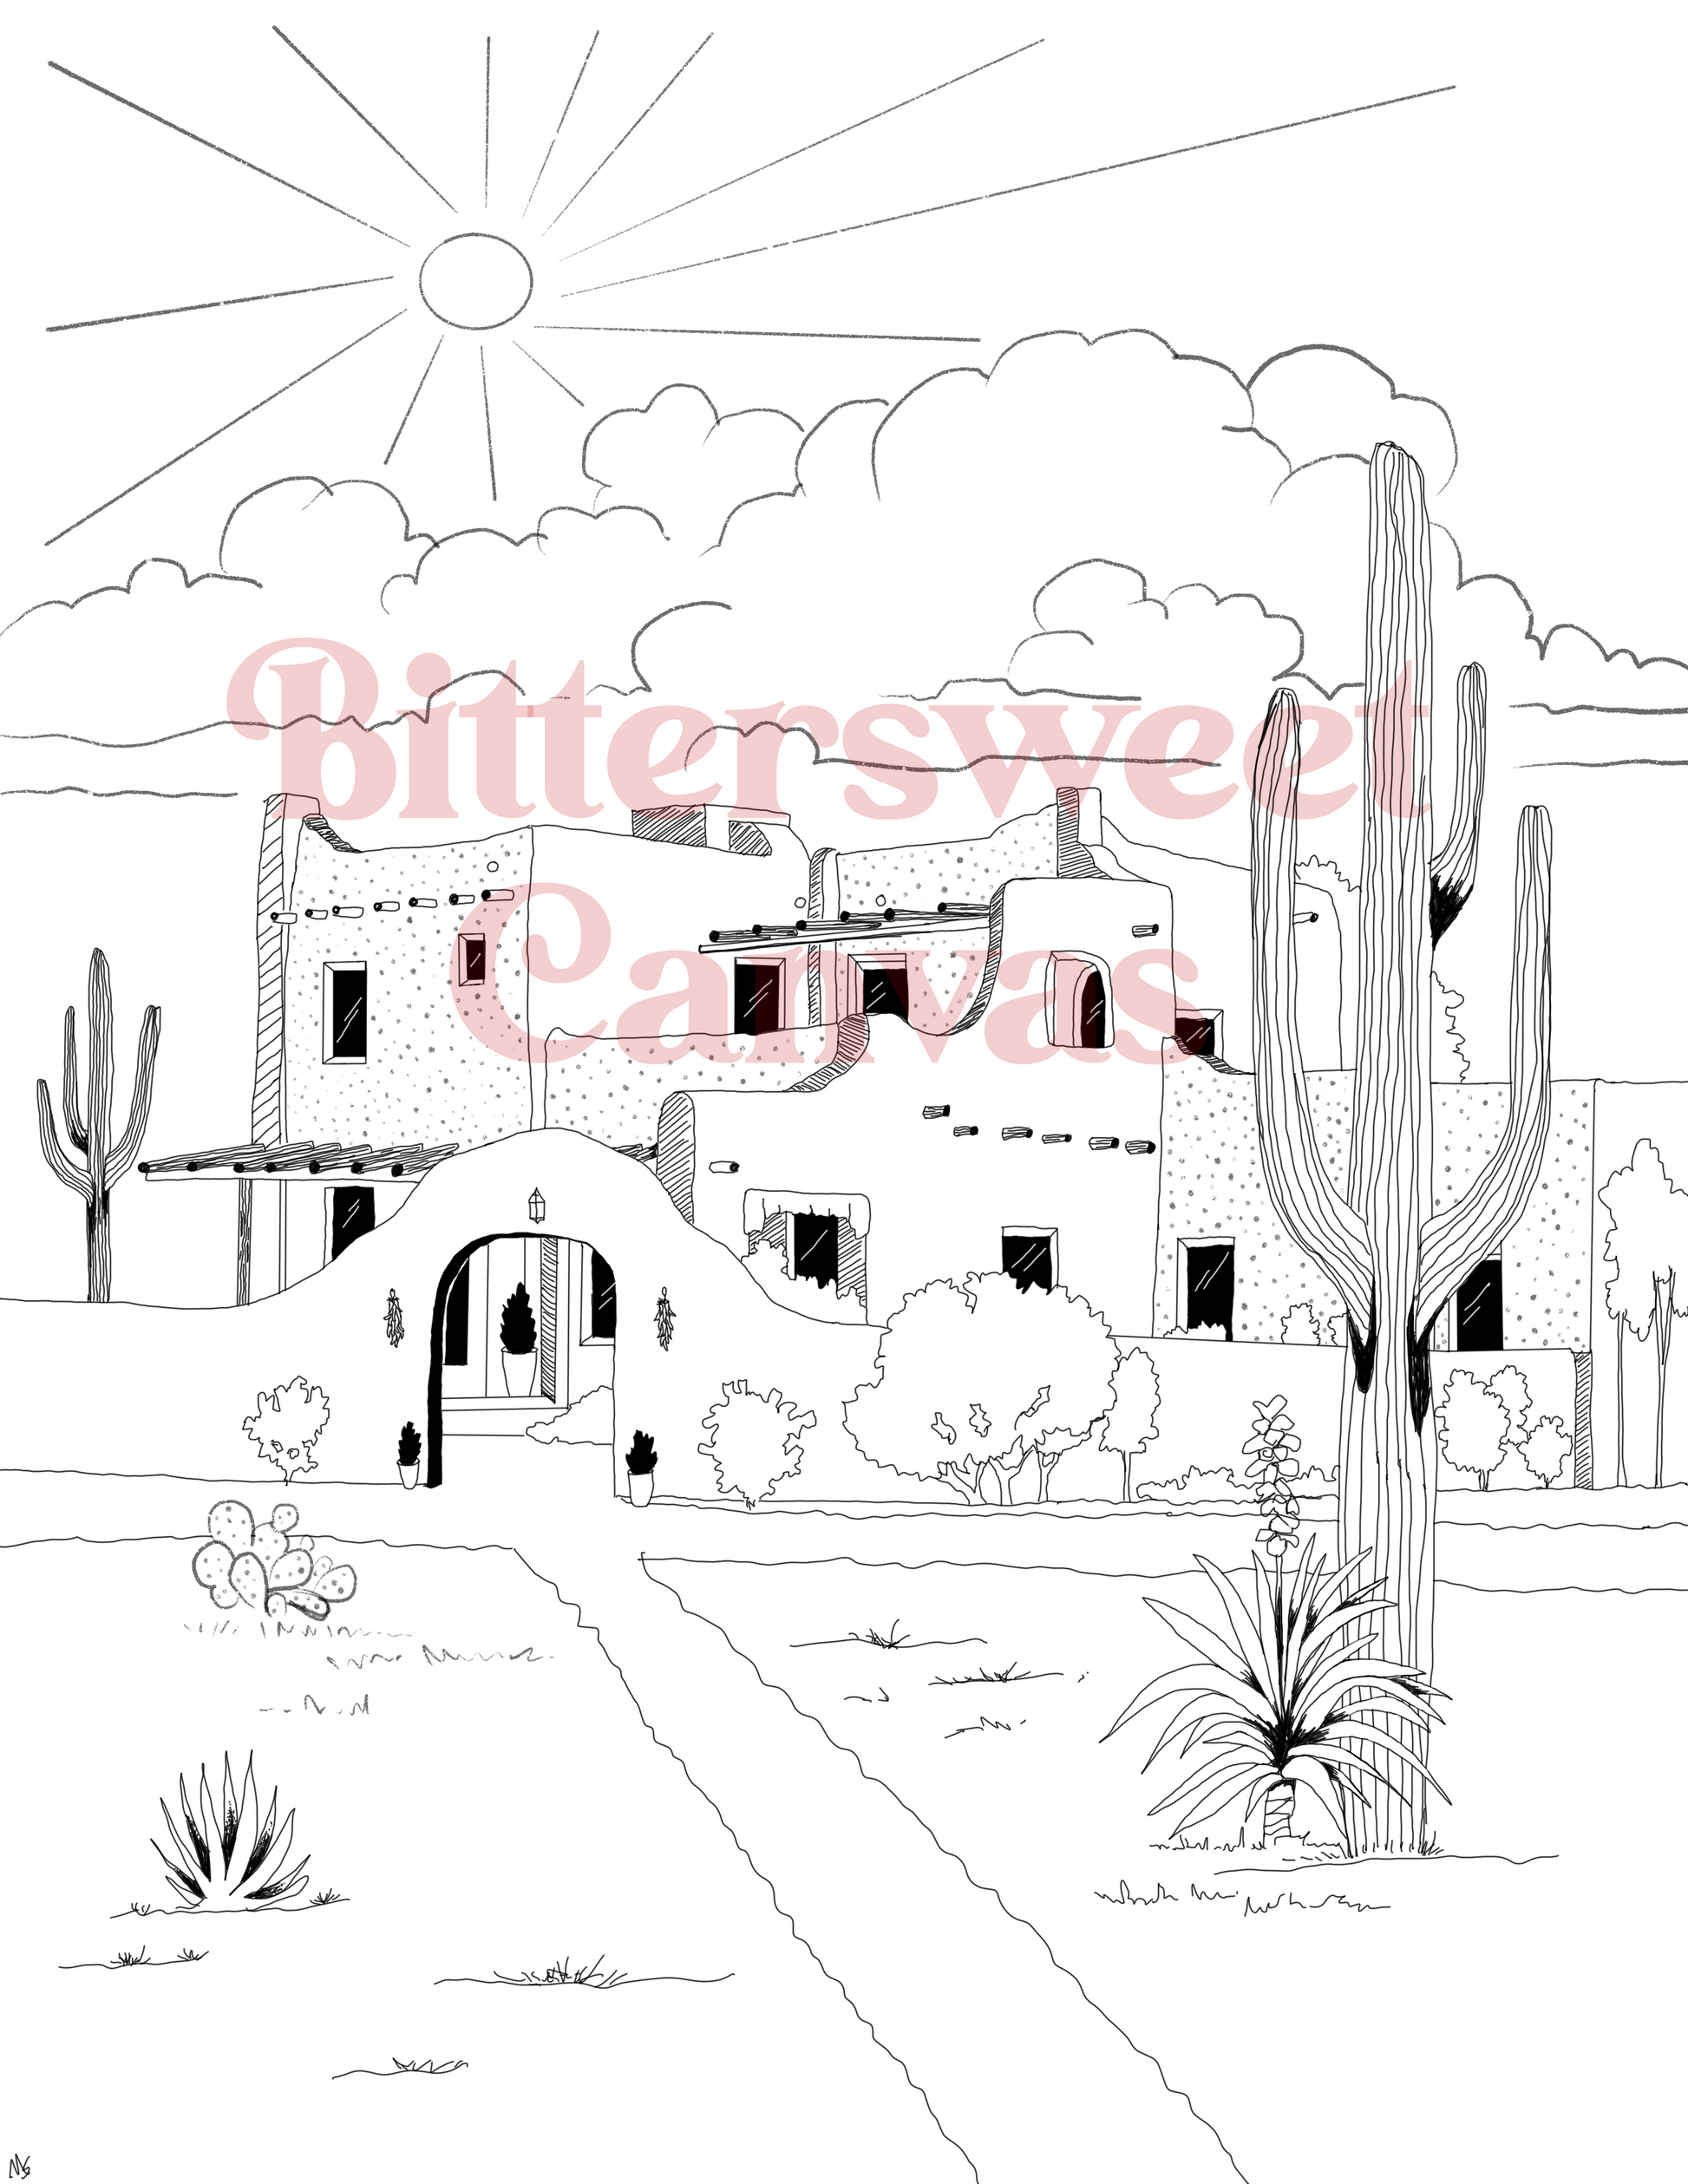 Adobe pueblo house coloring page digital download â bittersweet canvas